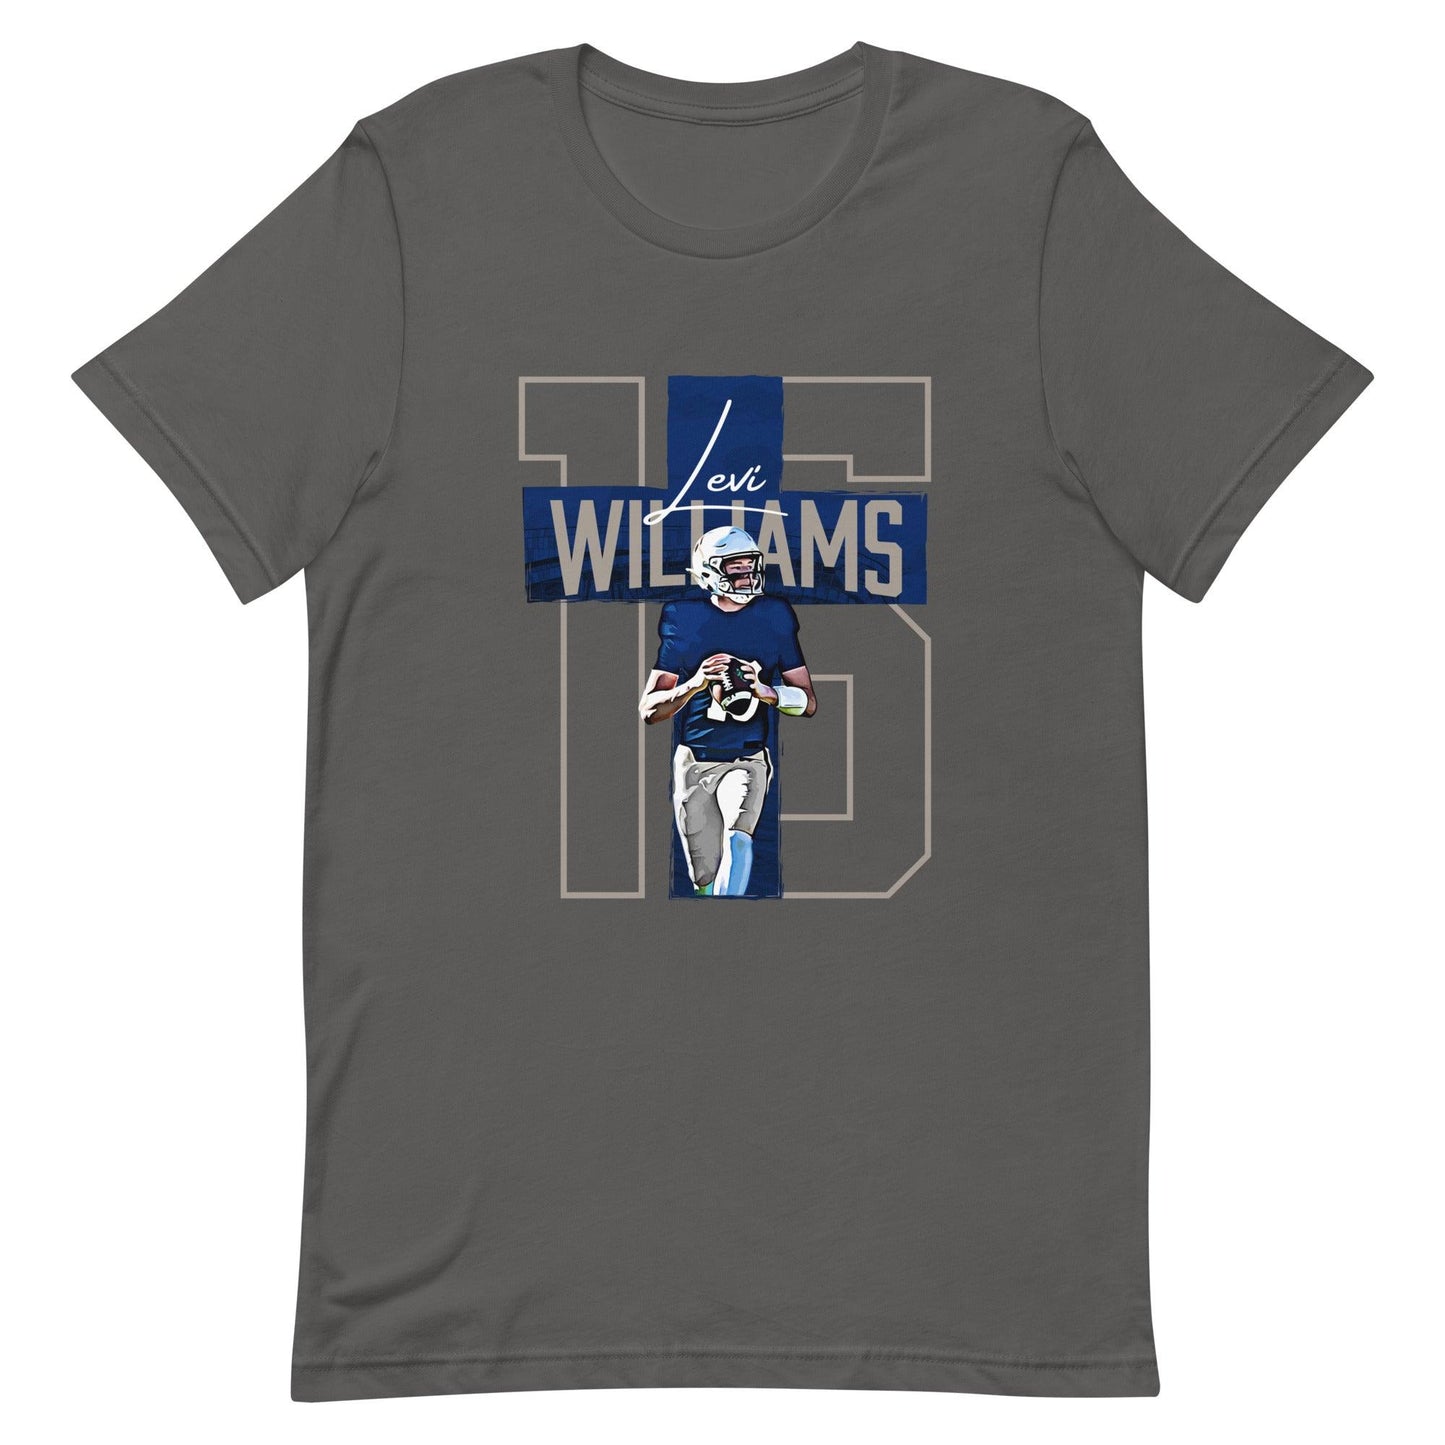 Levi Williams "Have Faith" t-shirt - Fan Arch